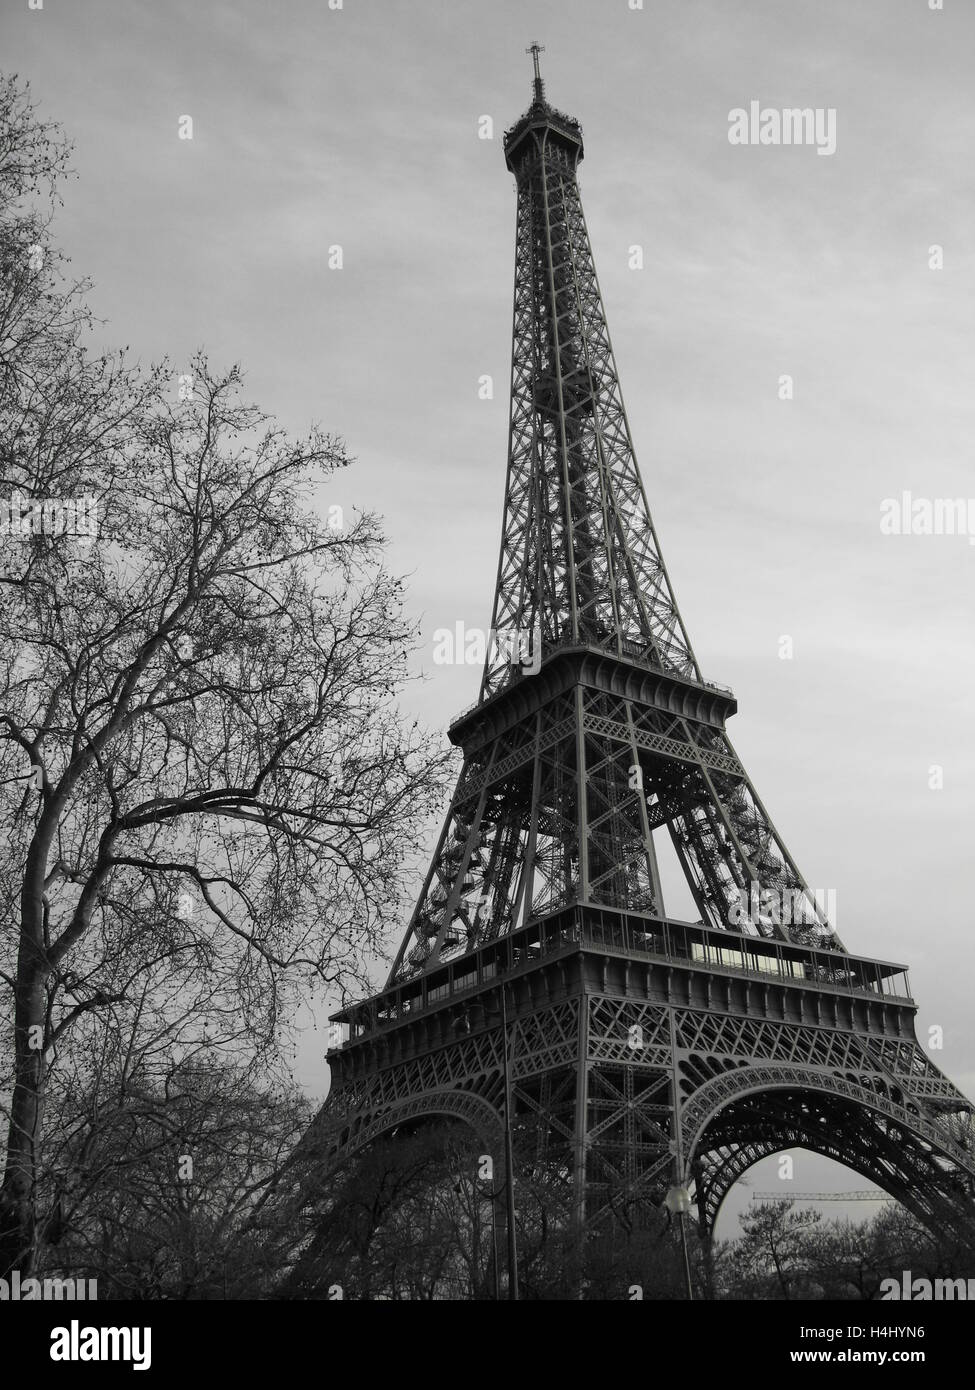 Black and white image, Eiffel Tower, trees, Paris, France. Stock Photo